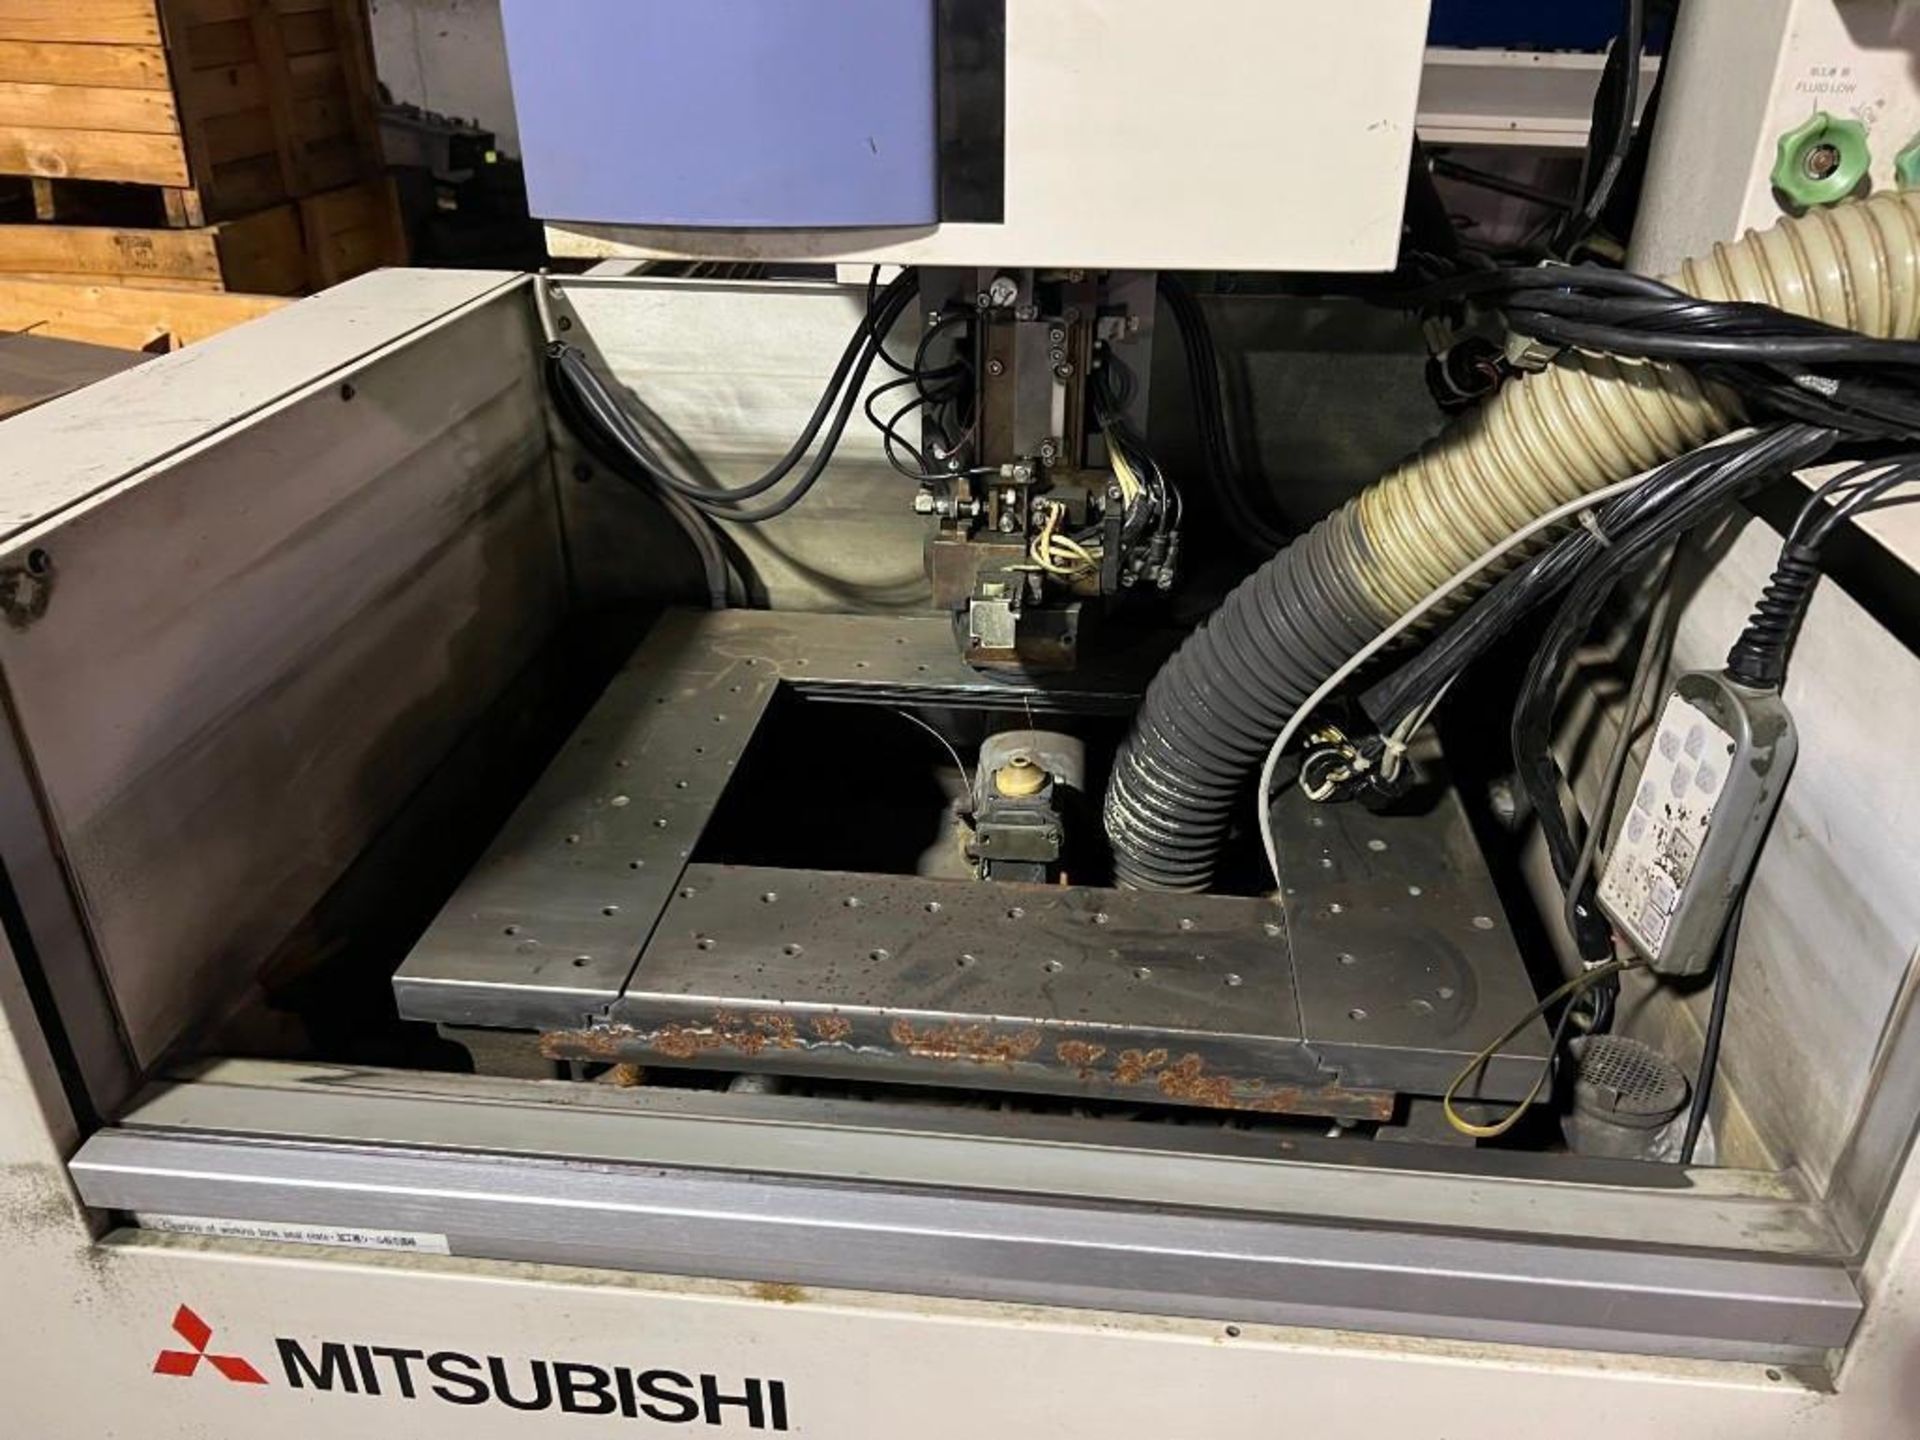 1996 Mitsubishi EDM FX10 - Parts Machine - Image 2 of 11